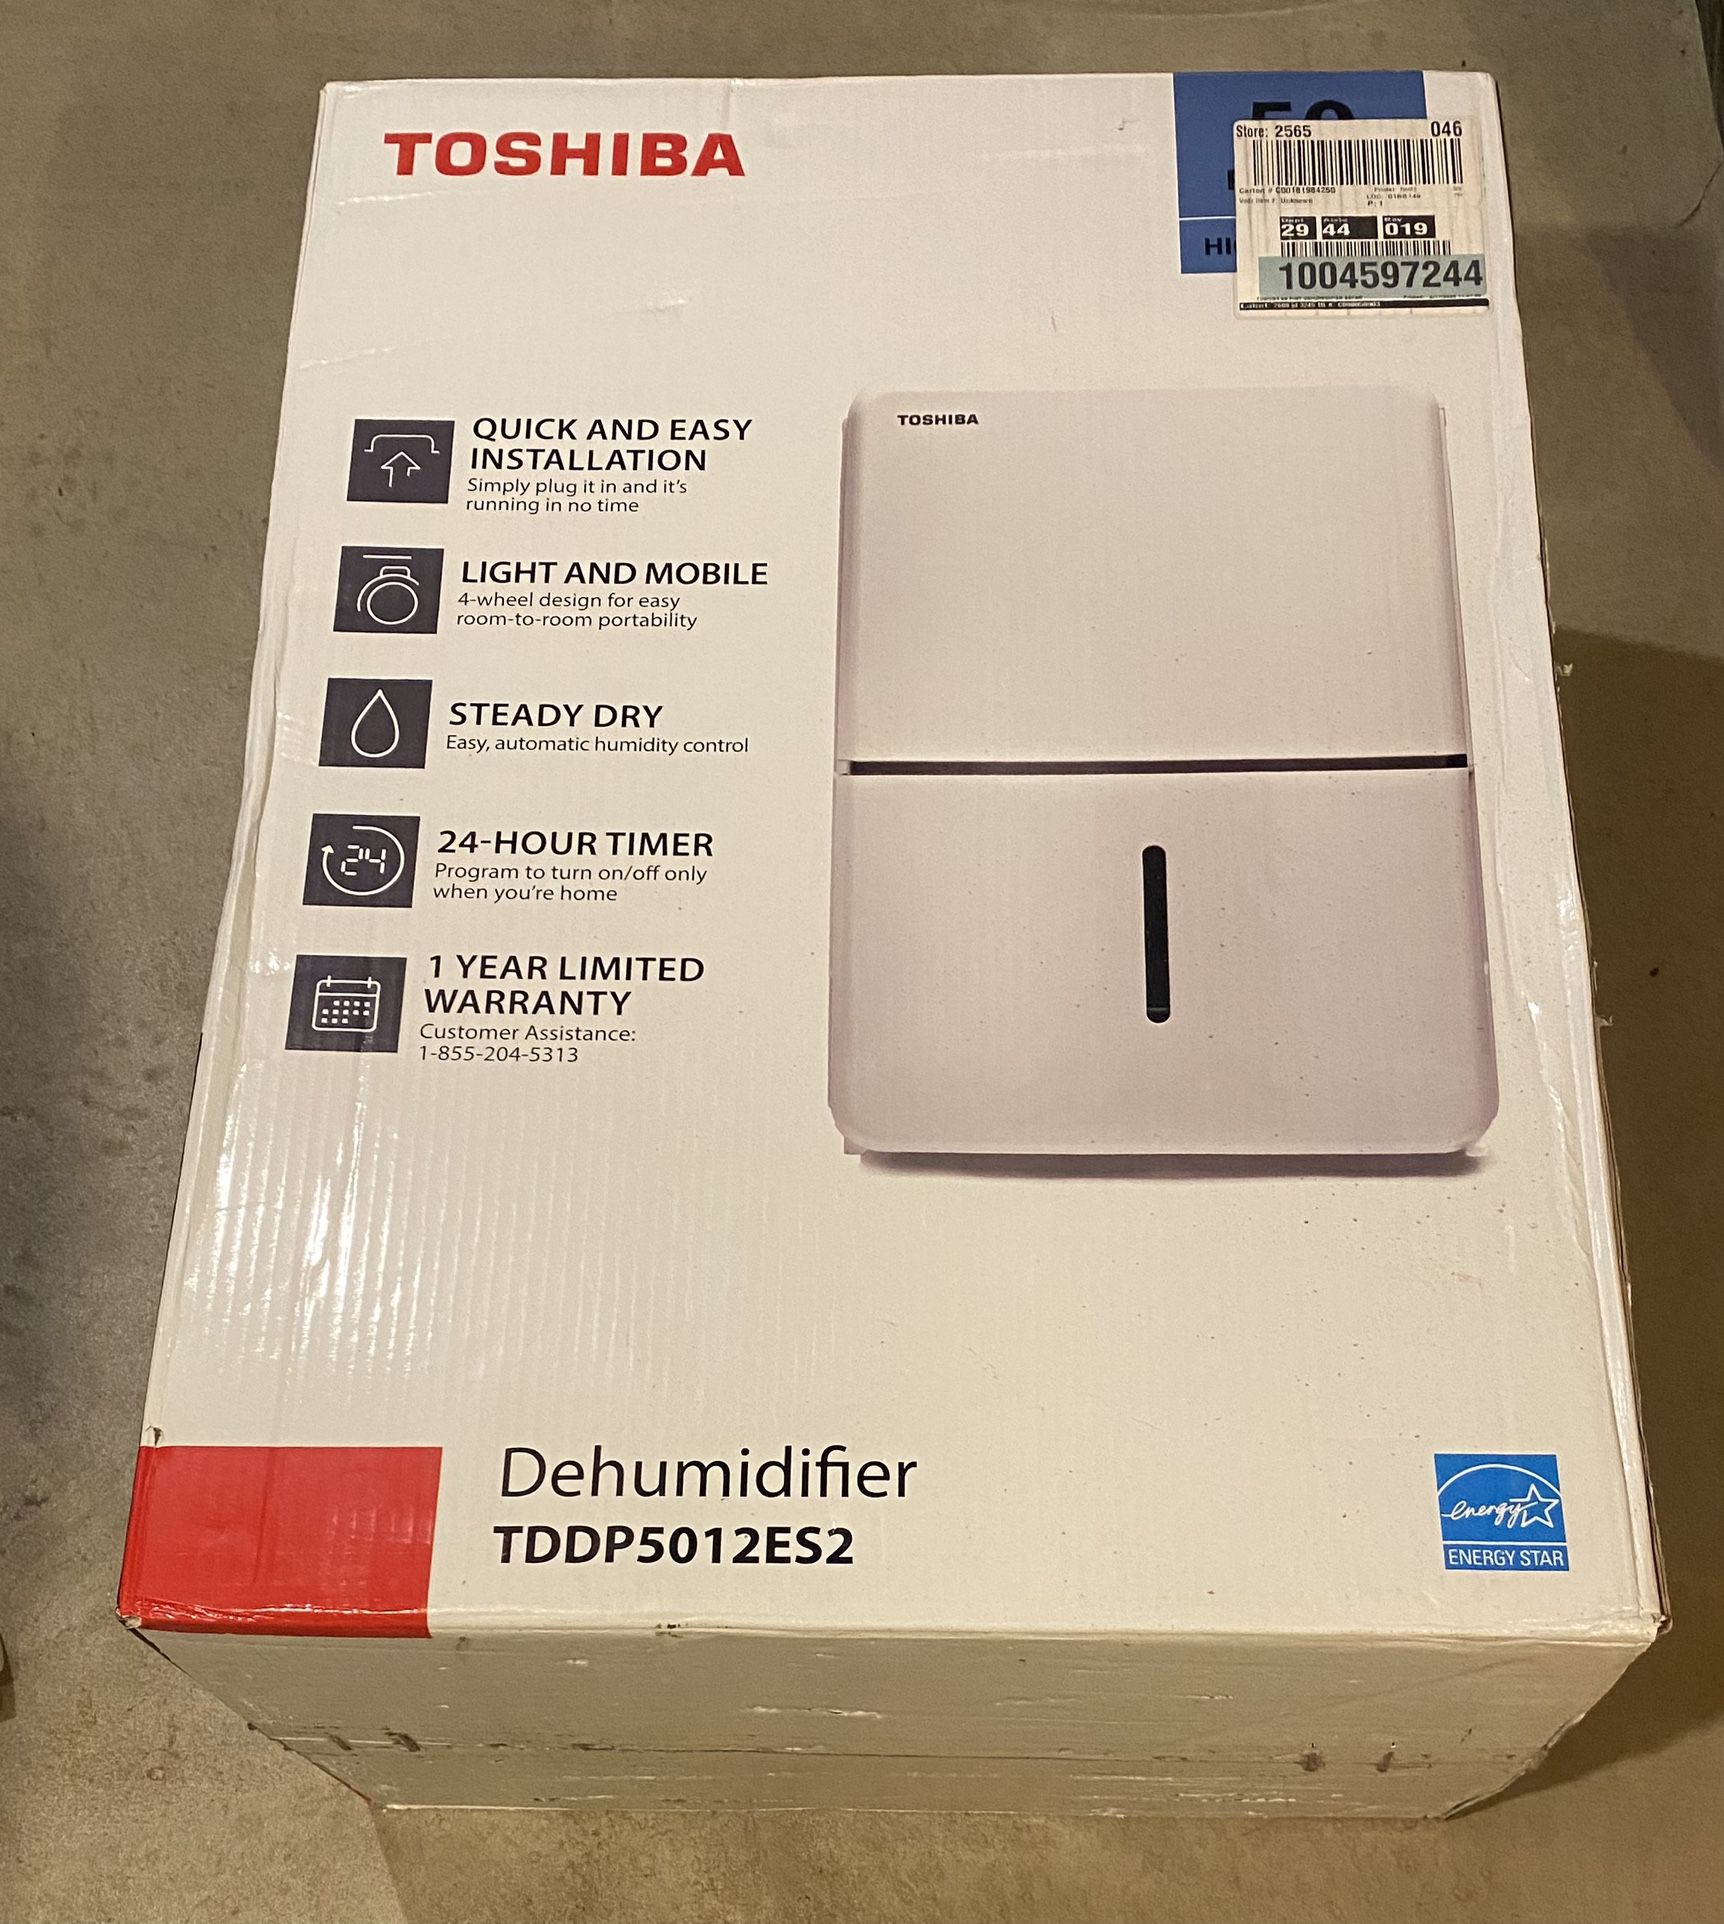 Brand New Dehumidifier 